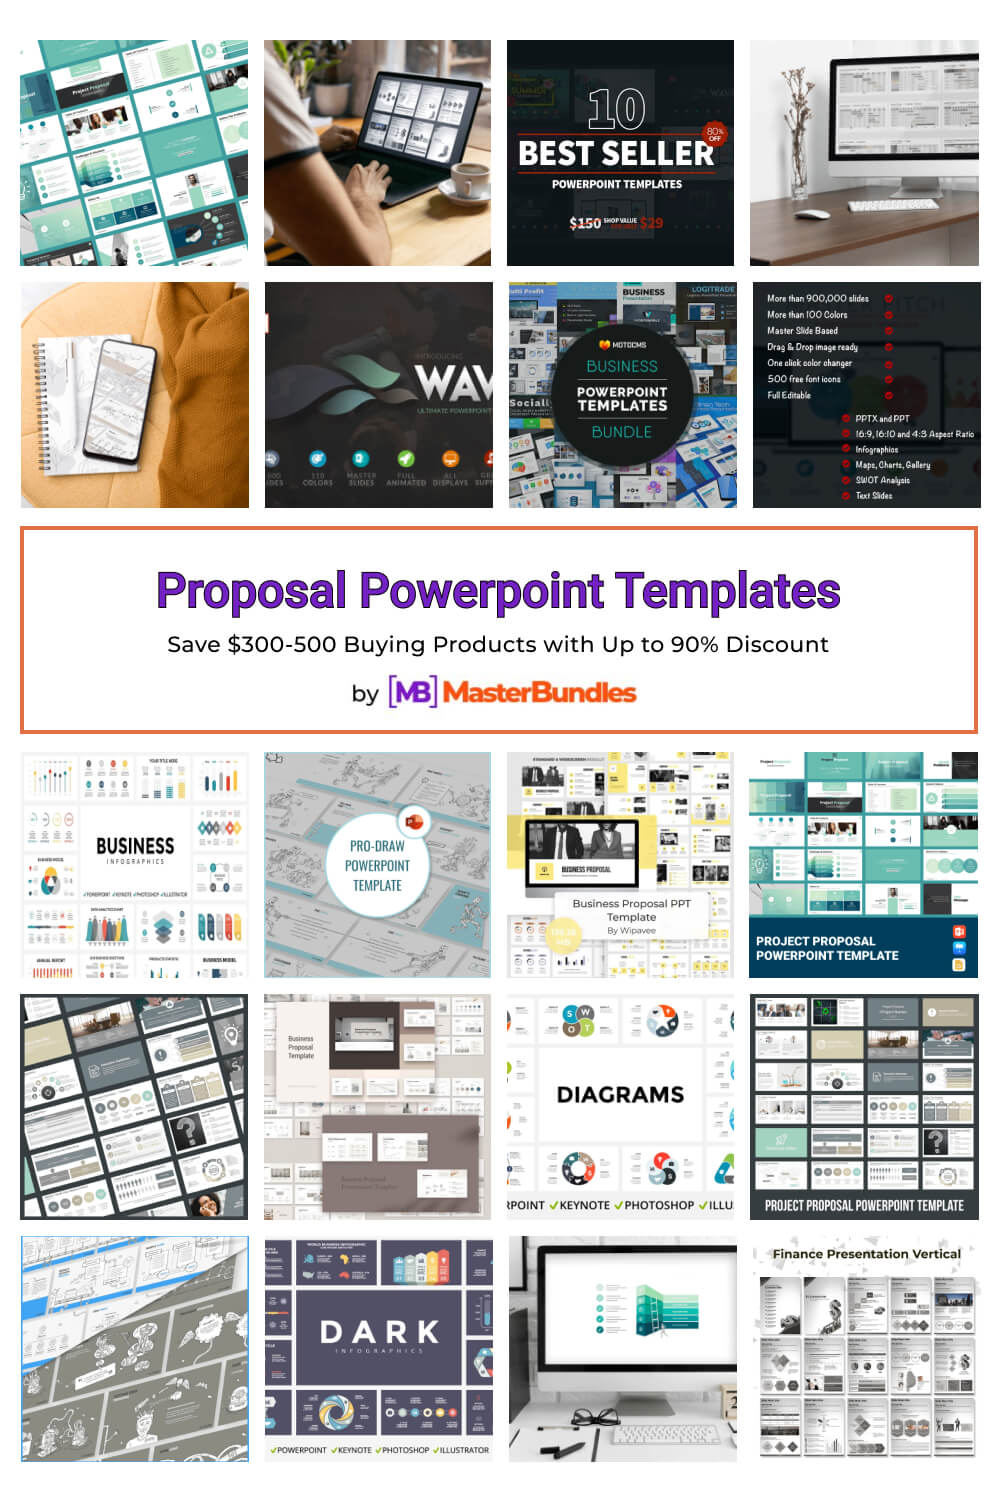 proposal powerpoint templates pinterest image.